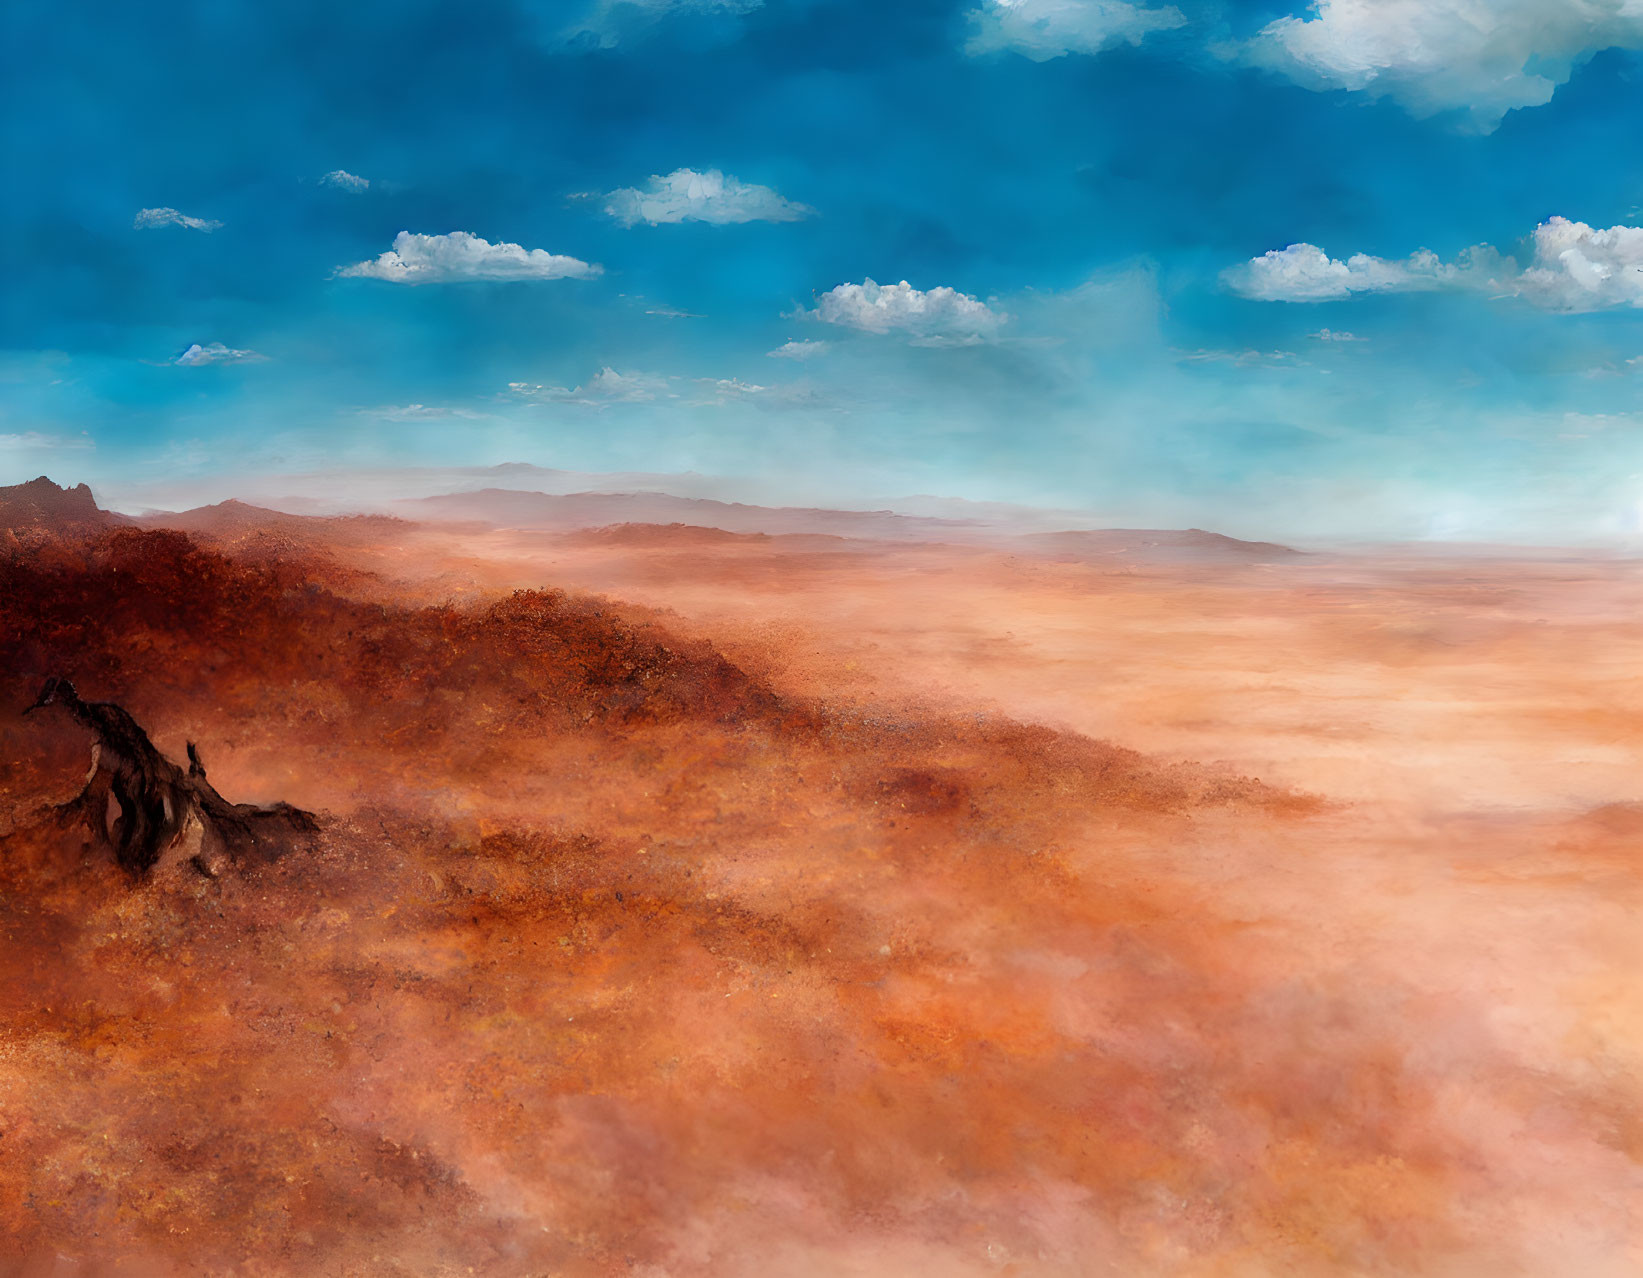 Vibrant digital painting of desert landscape with orange hills and blue sky